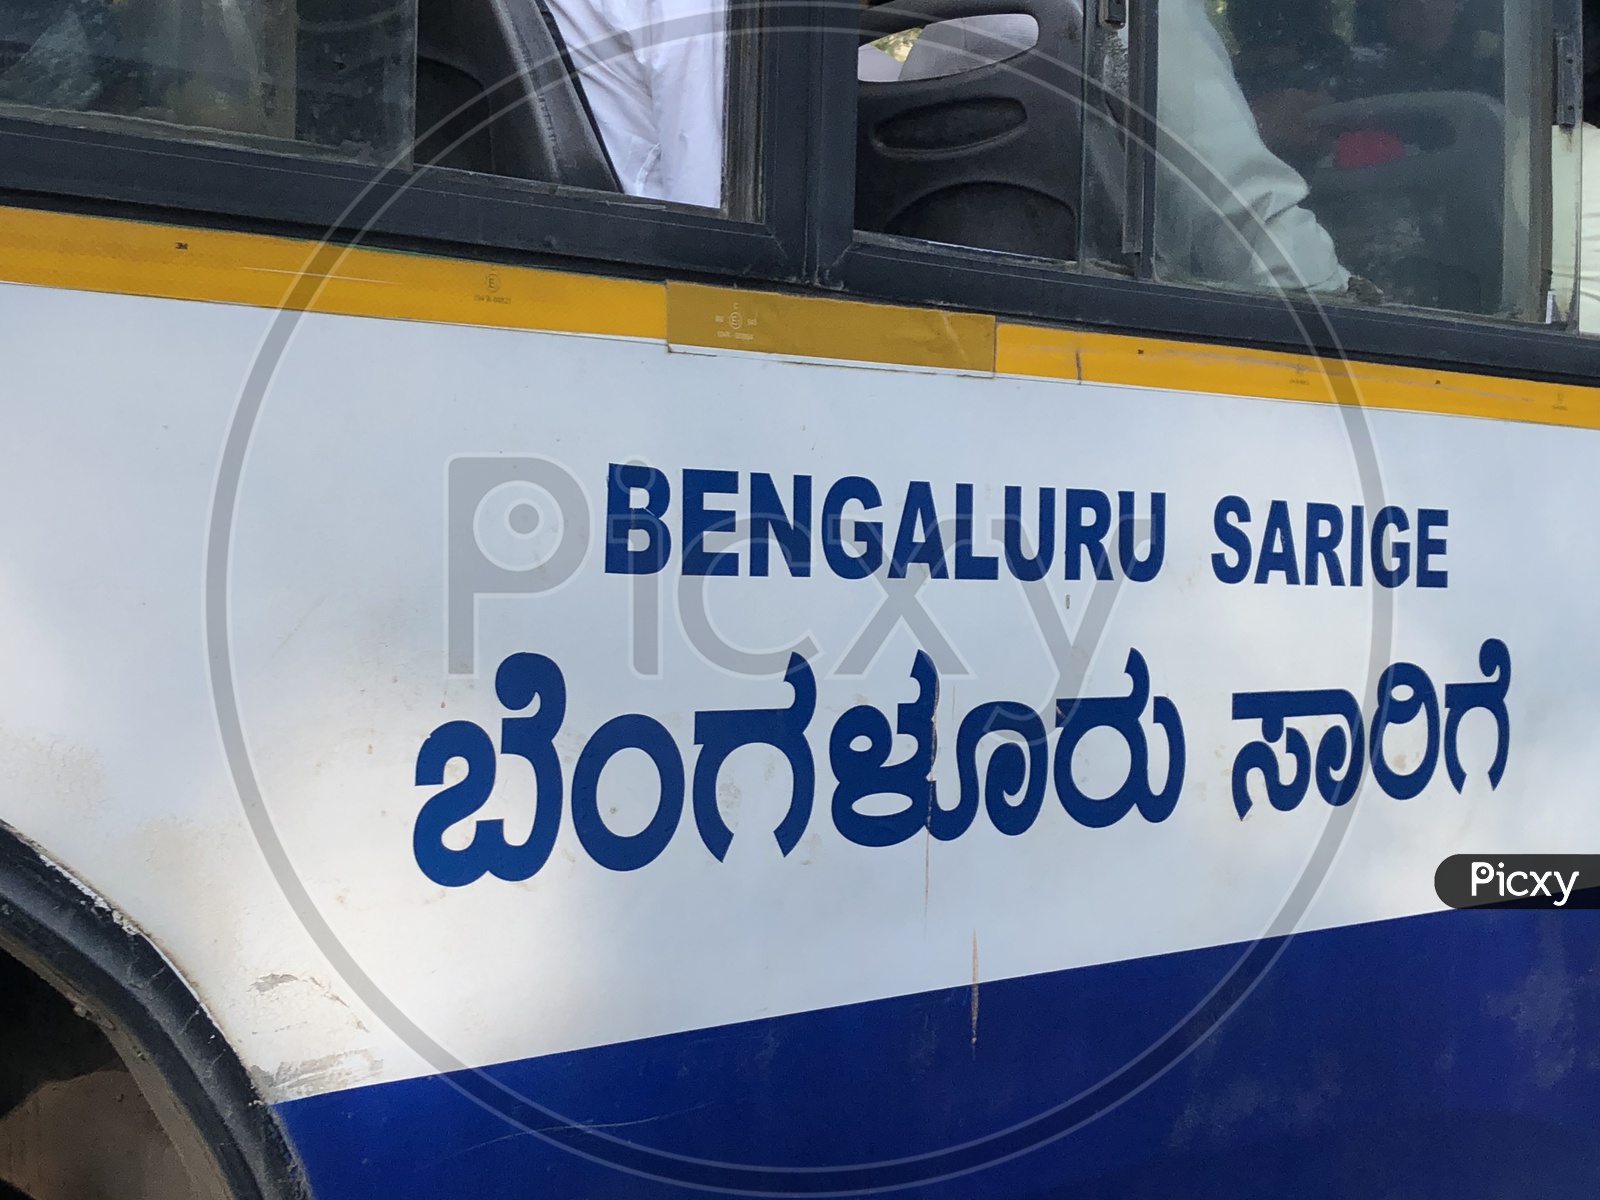 Bengaluru Sarige